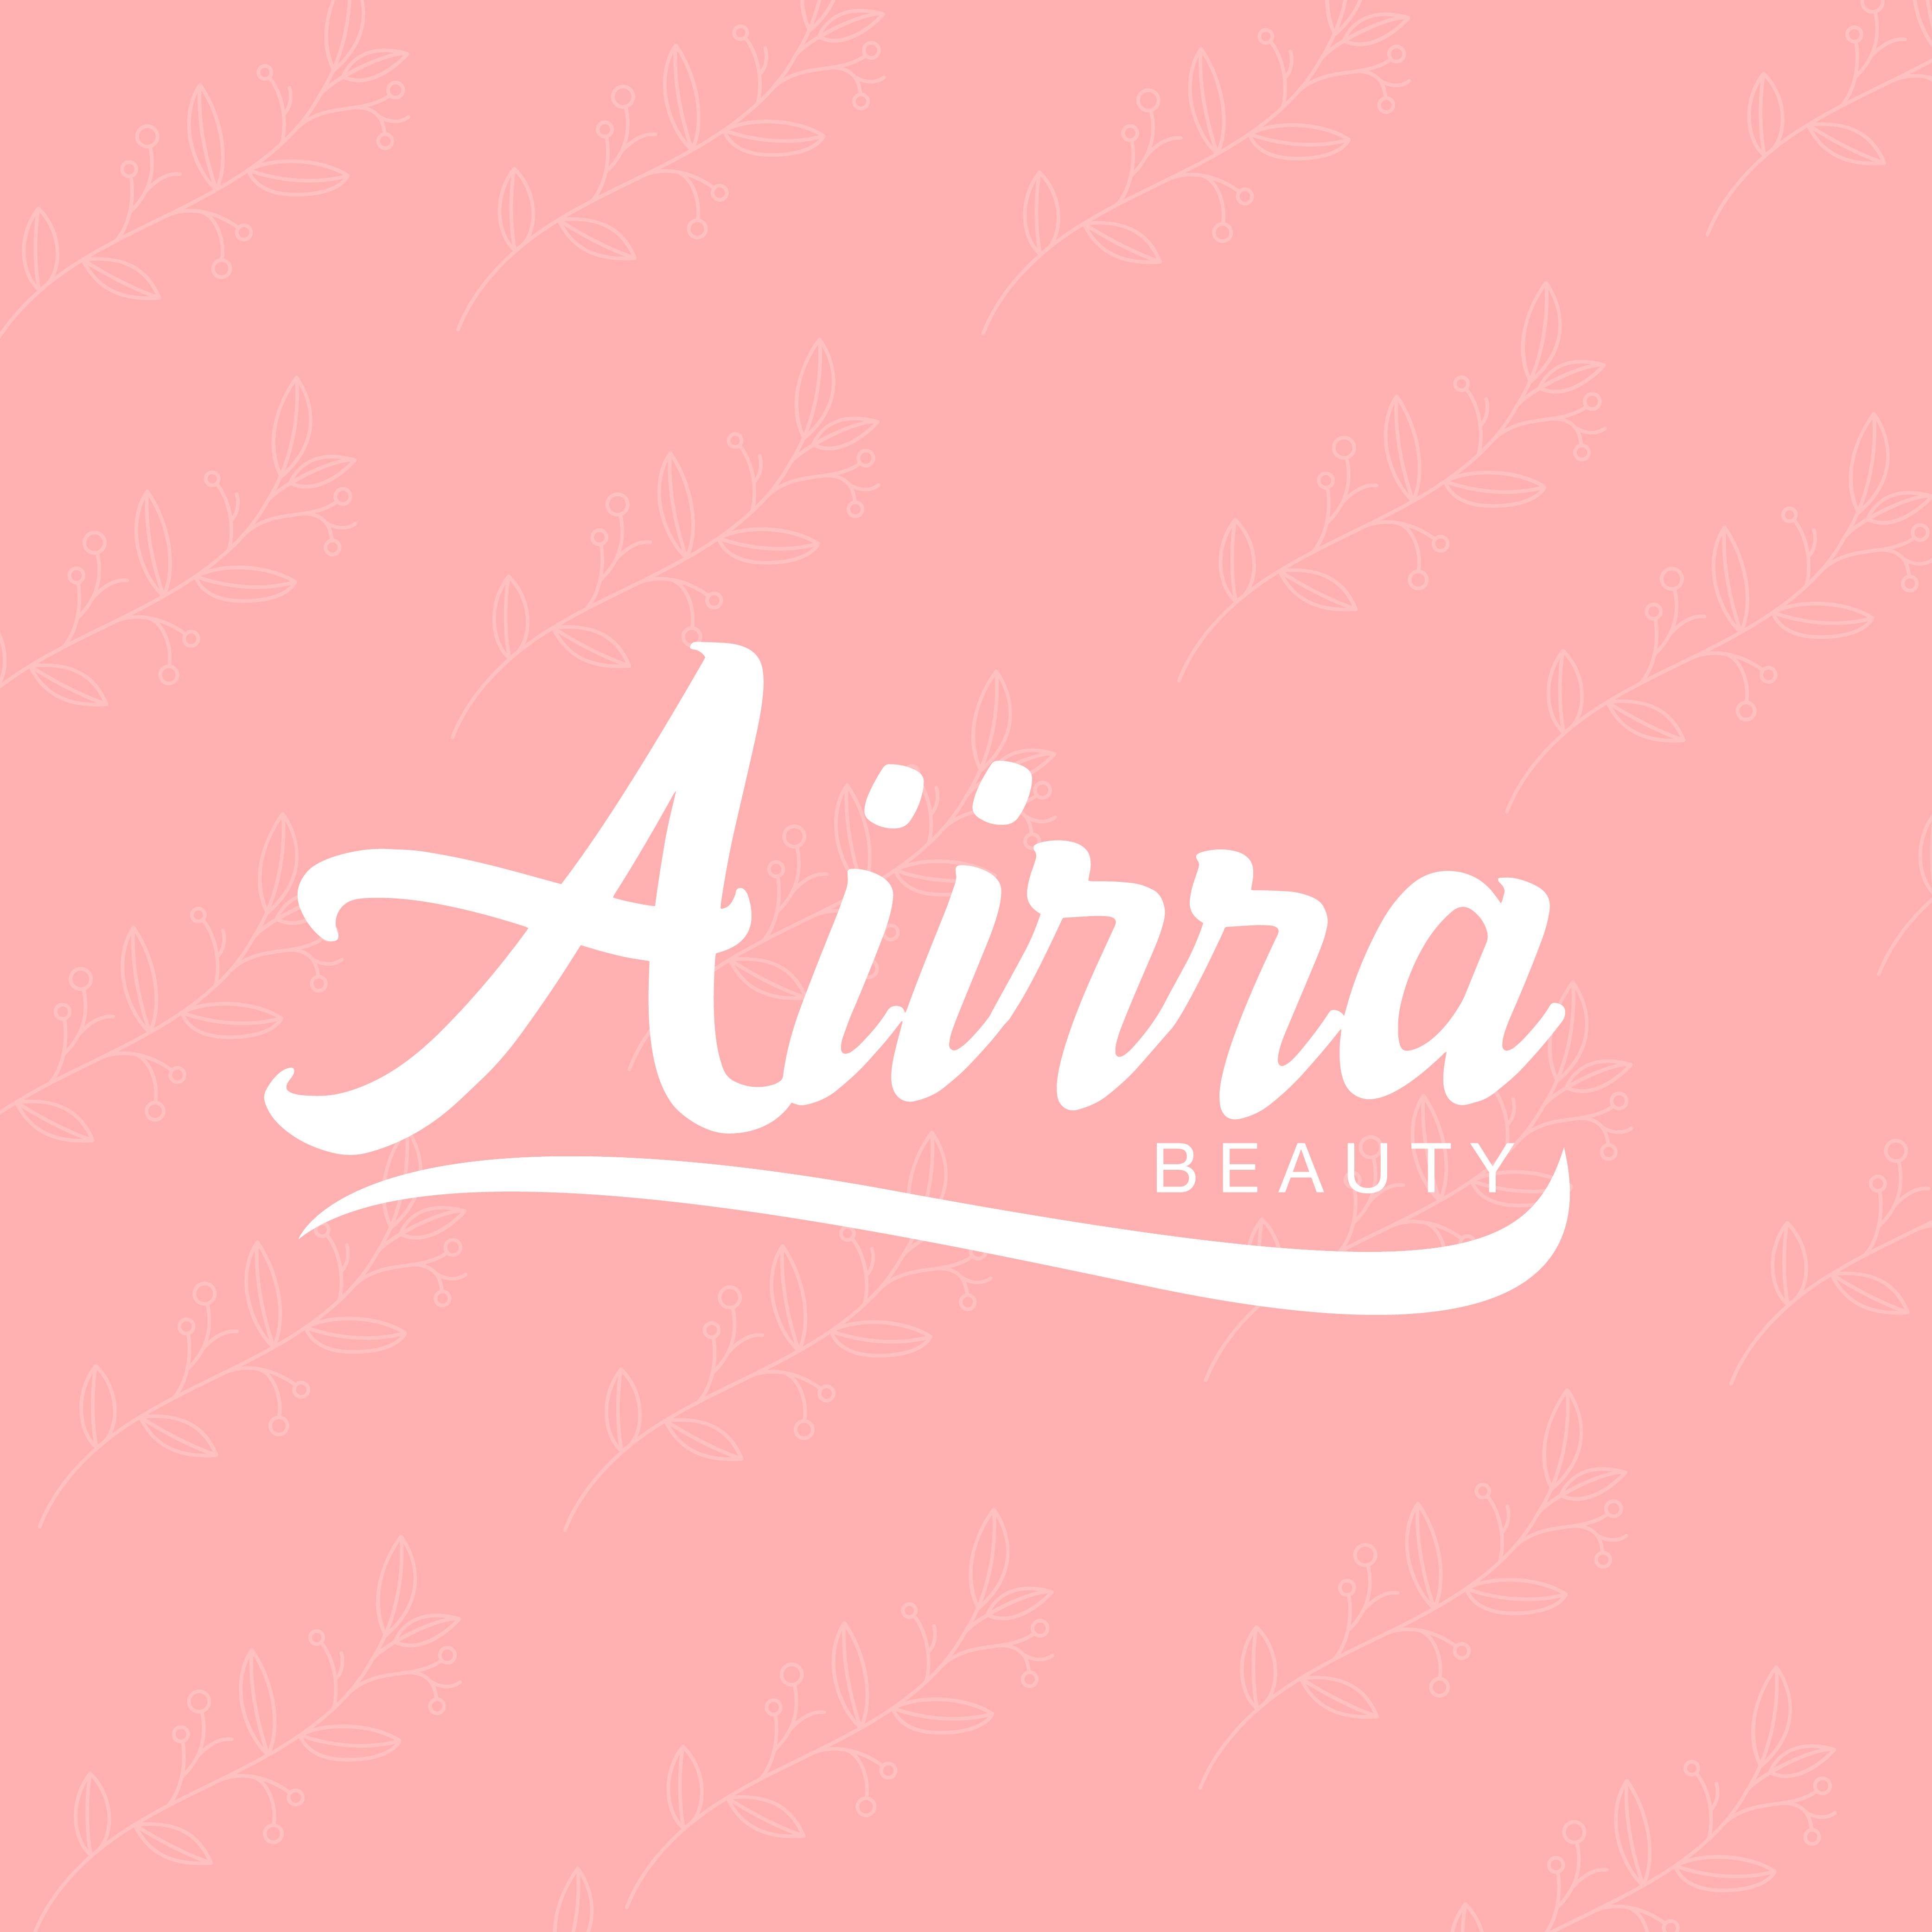 Aiirra Beauty